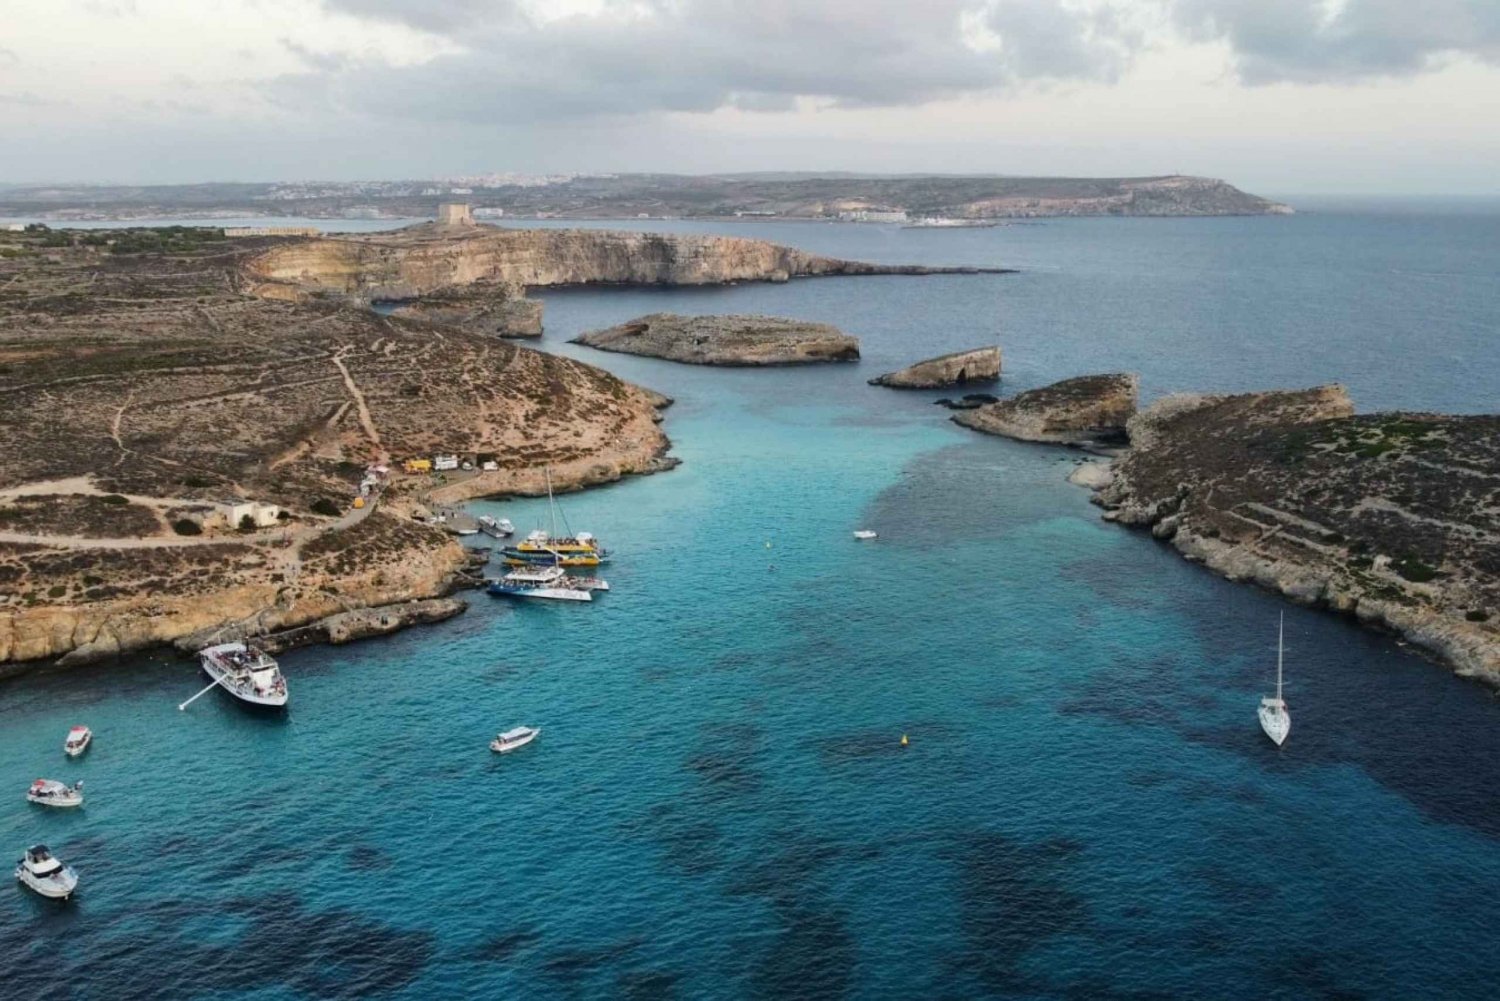 Gozo : Transfert aller-retour en bateau rapide vers le lagon bleu de Comino